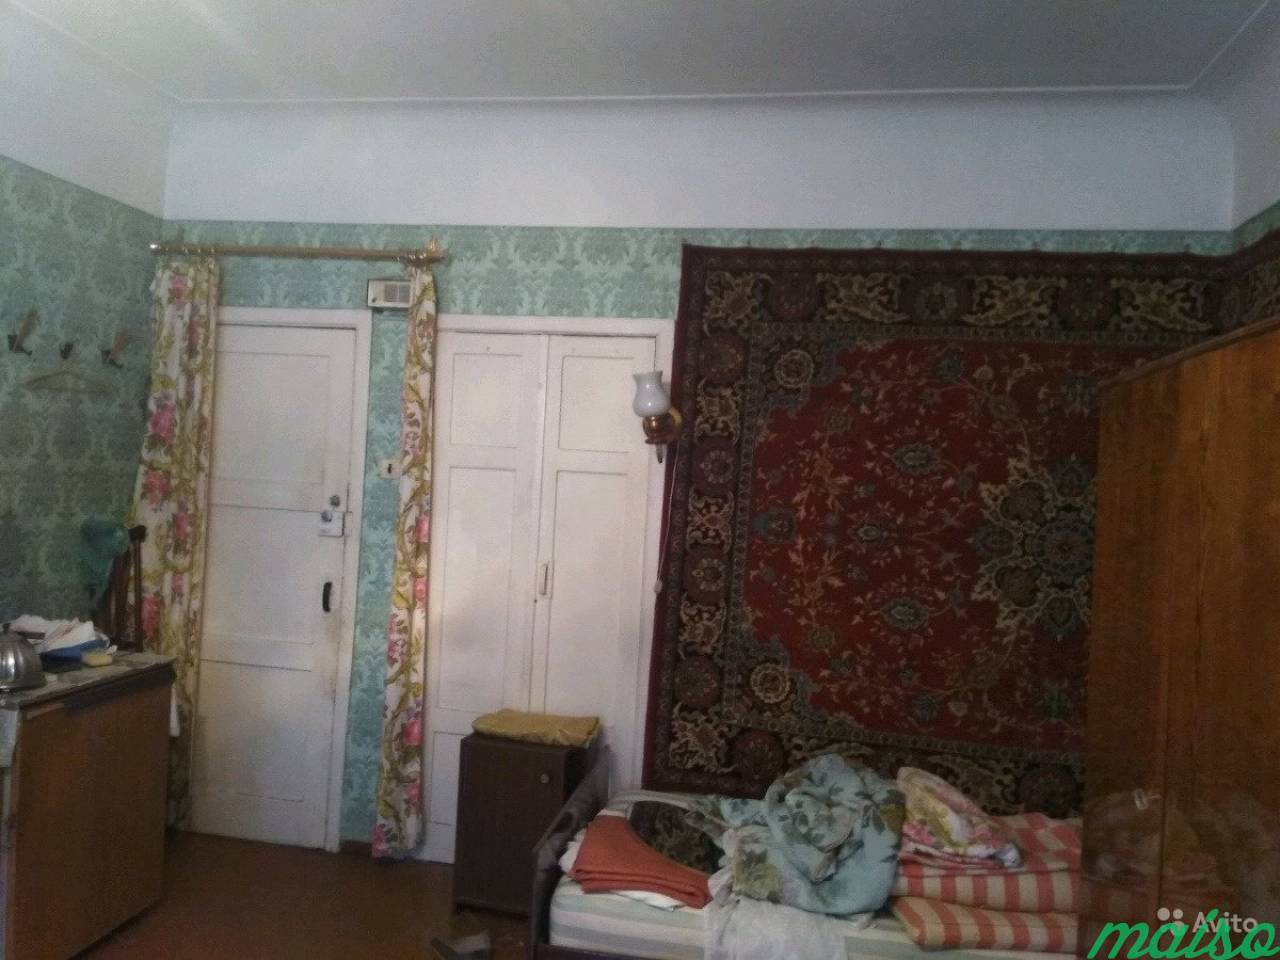 Комната 23 м² в 3-к, 3/5 эт. в Санкт-Петербурге. Фото 5